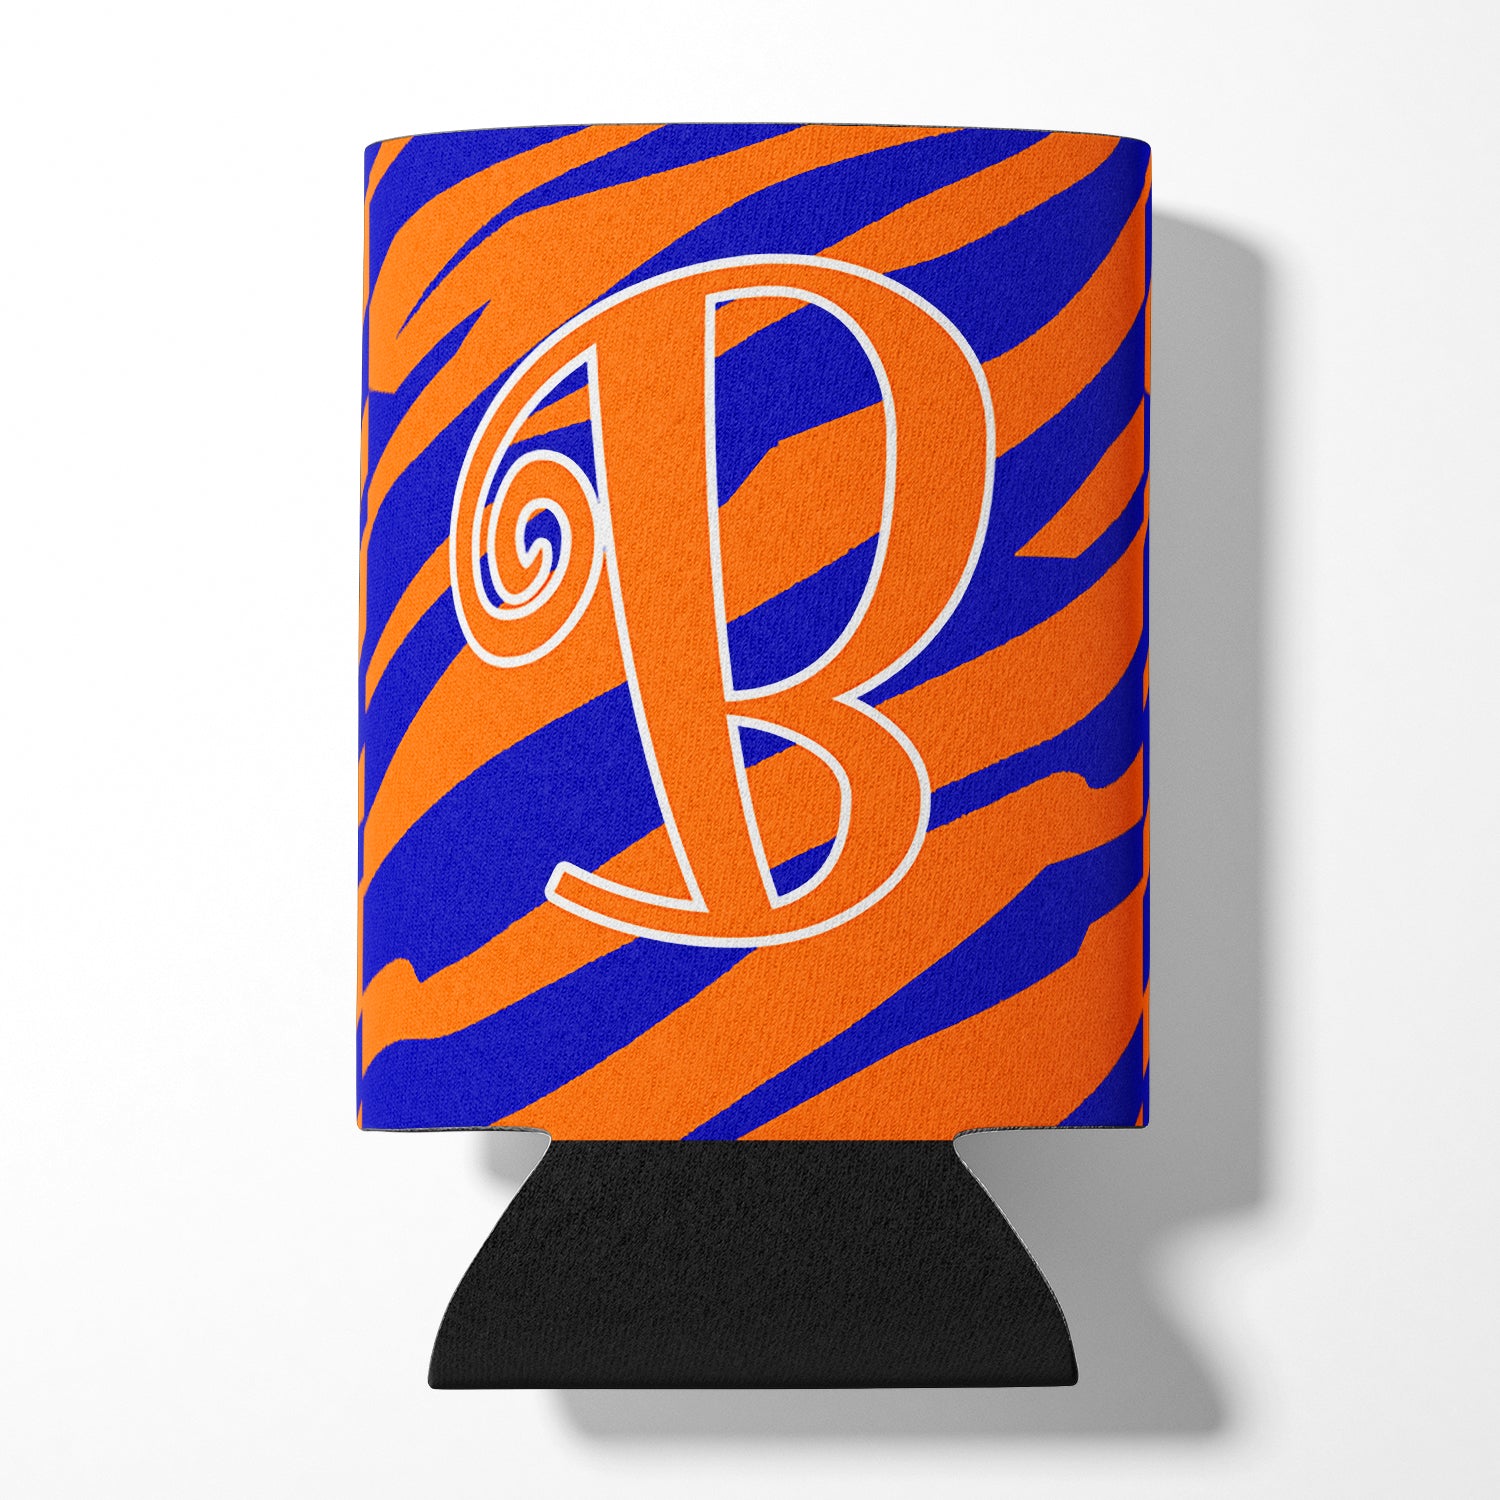 Monogramme initial de la lettre B - Tiger Stripe Blue and Orange Can Beverage Insulator Hugger